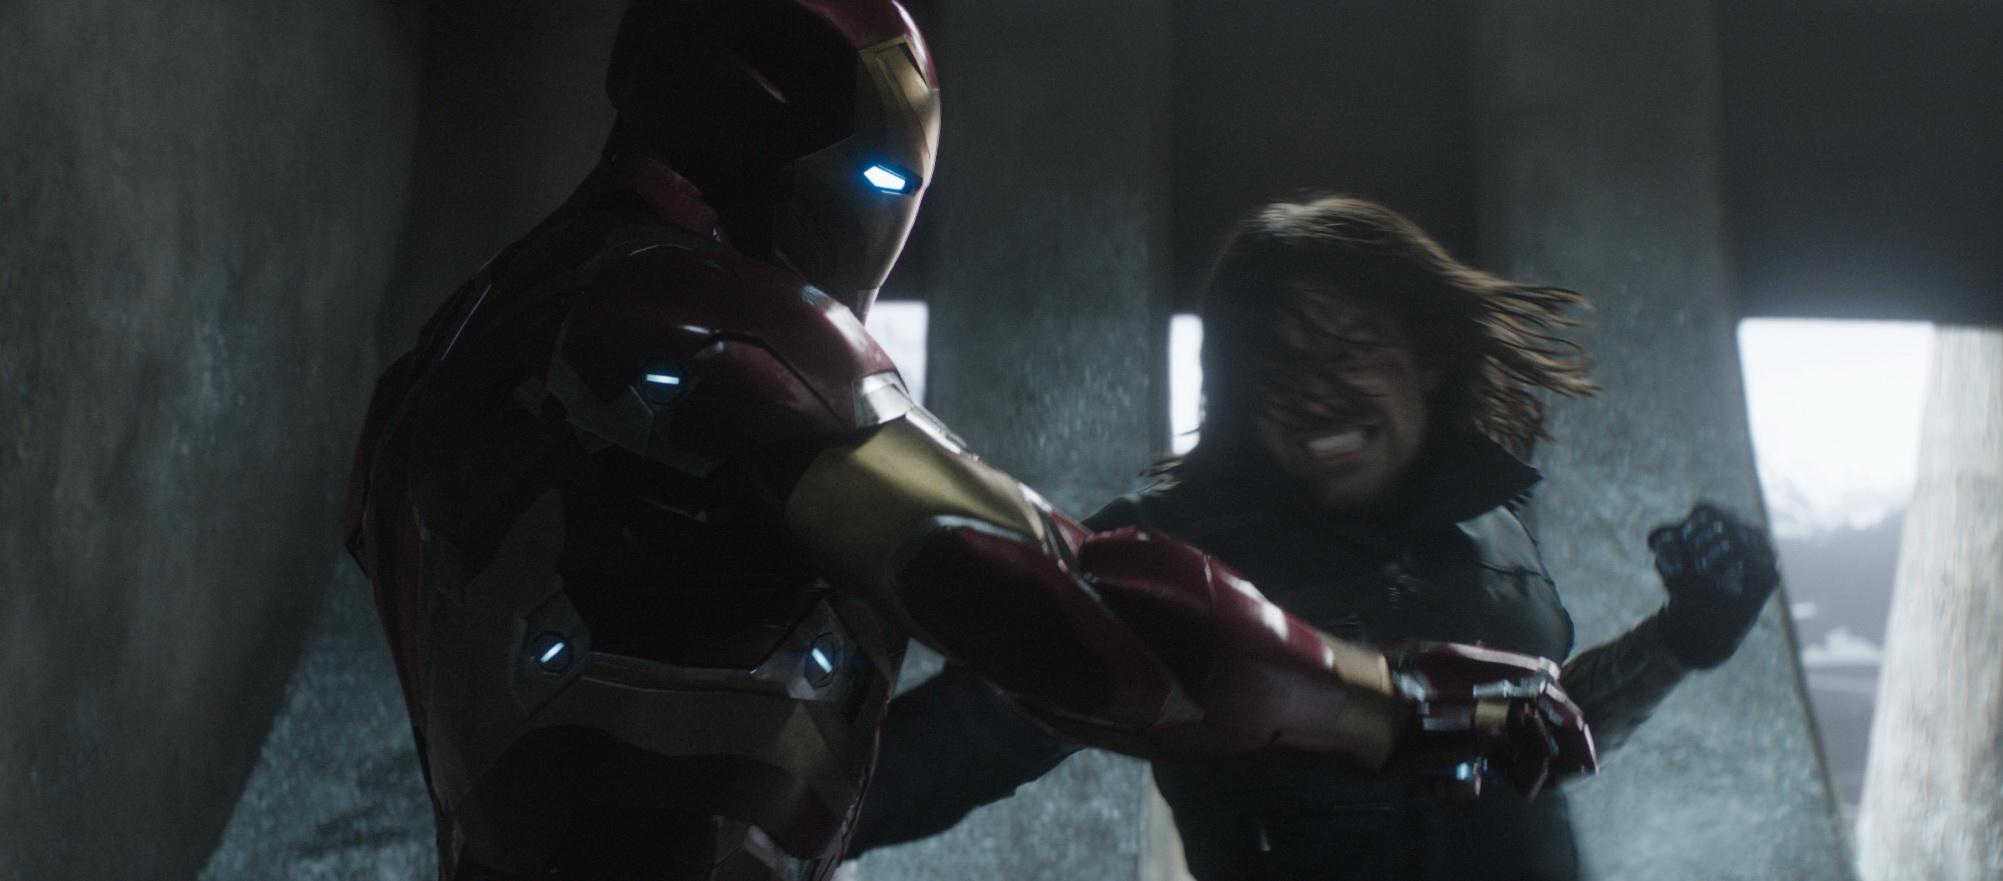 Marvel's Captain America: Civil War L to R: Iron Man/Tony Stark (Robert Downey Jr.) and Winter Soldier/Bucky Barnes (Sebastian Stan) Photo Credit: Zade Rosenthal © Marvel 2016